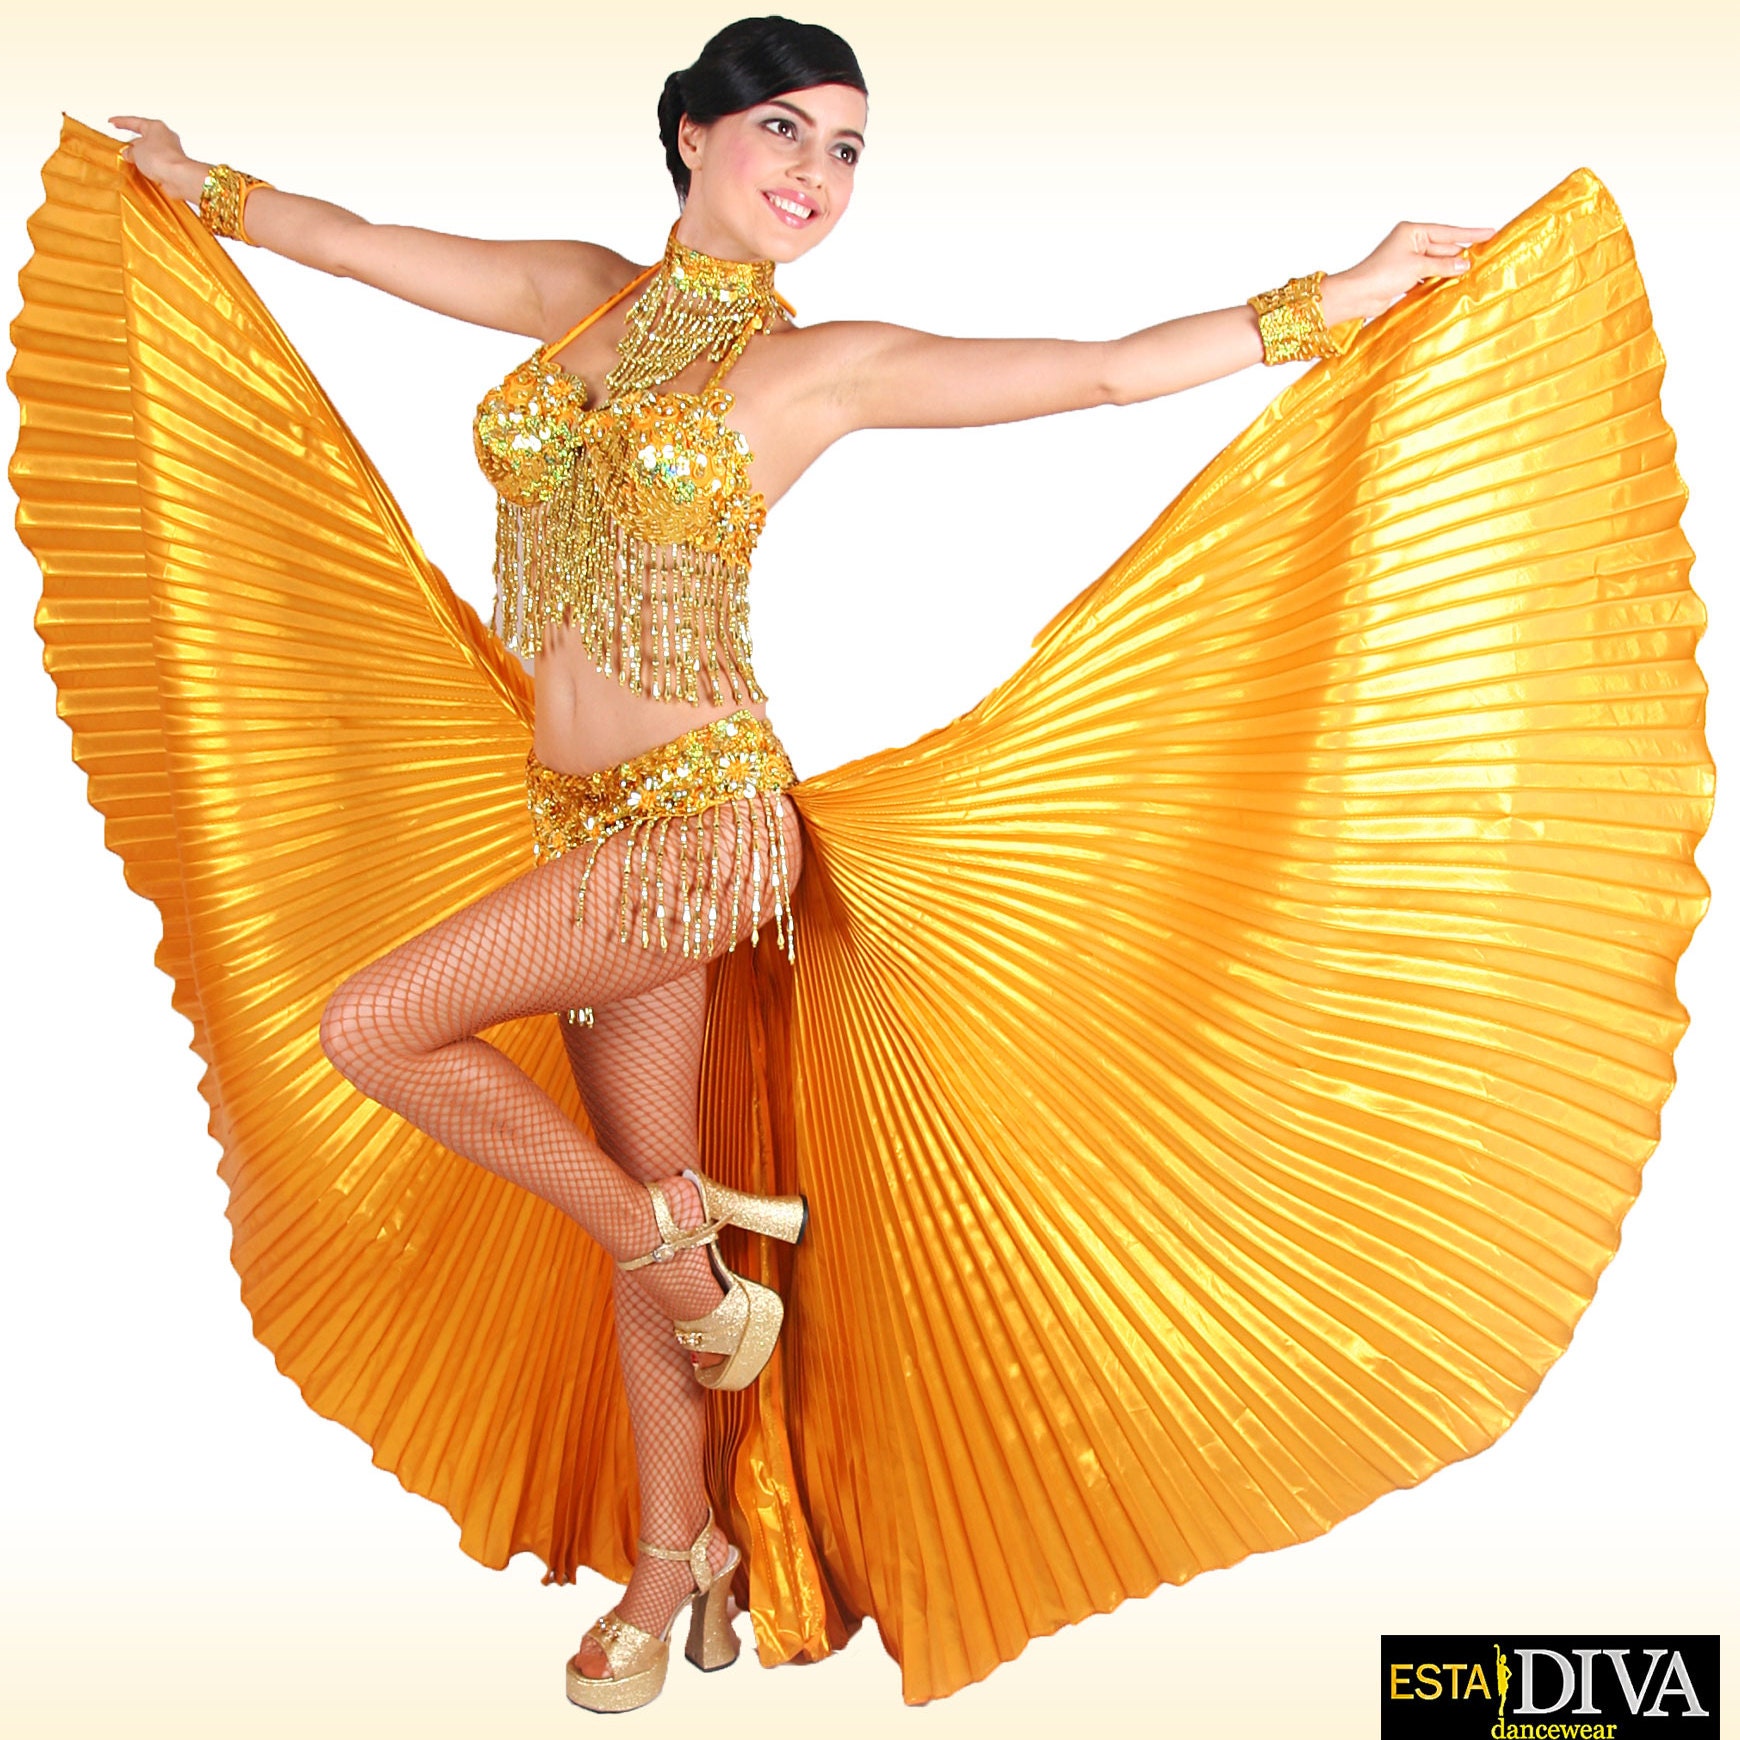 kindben Lånte Skorpe Feather Dress Pluma De Noche Vegas Showgirl Outfit Dance - Etsy